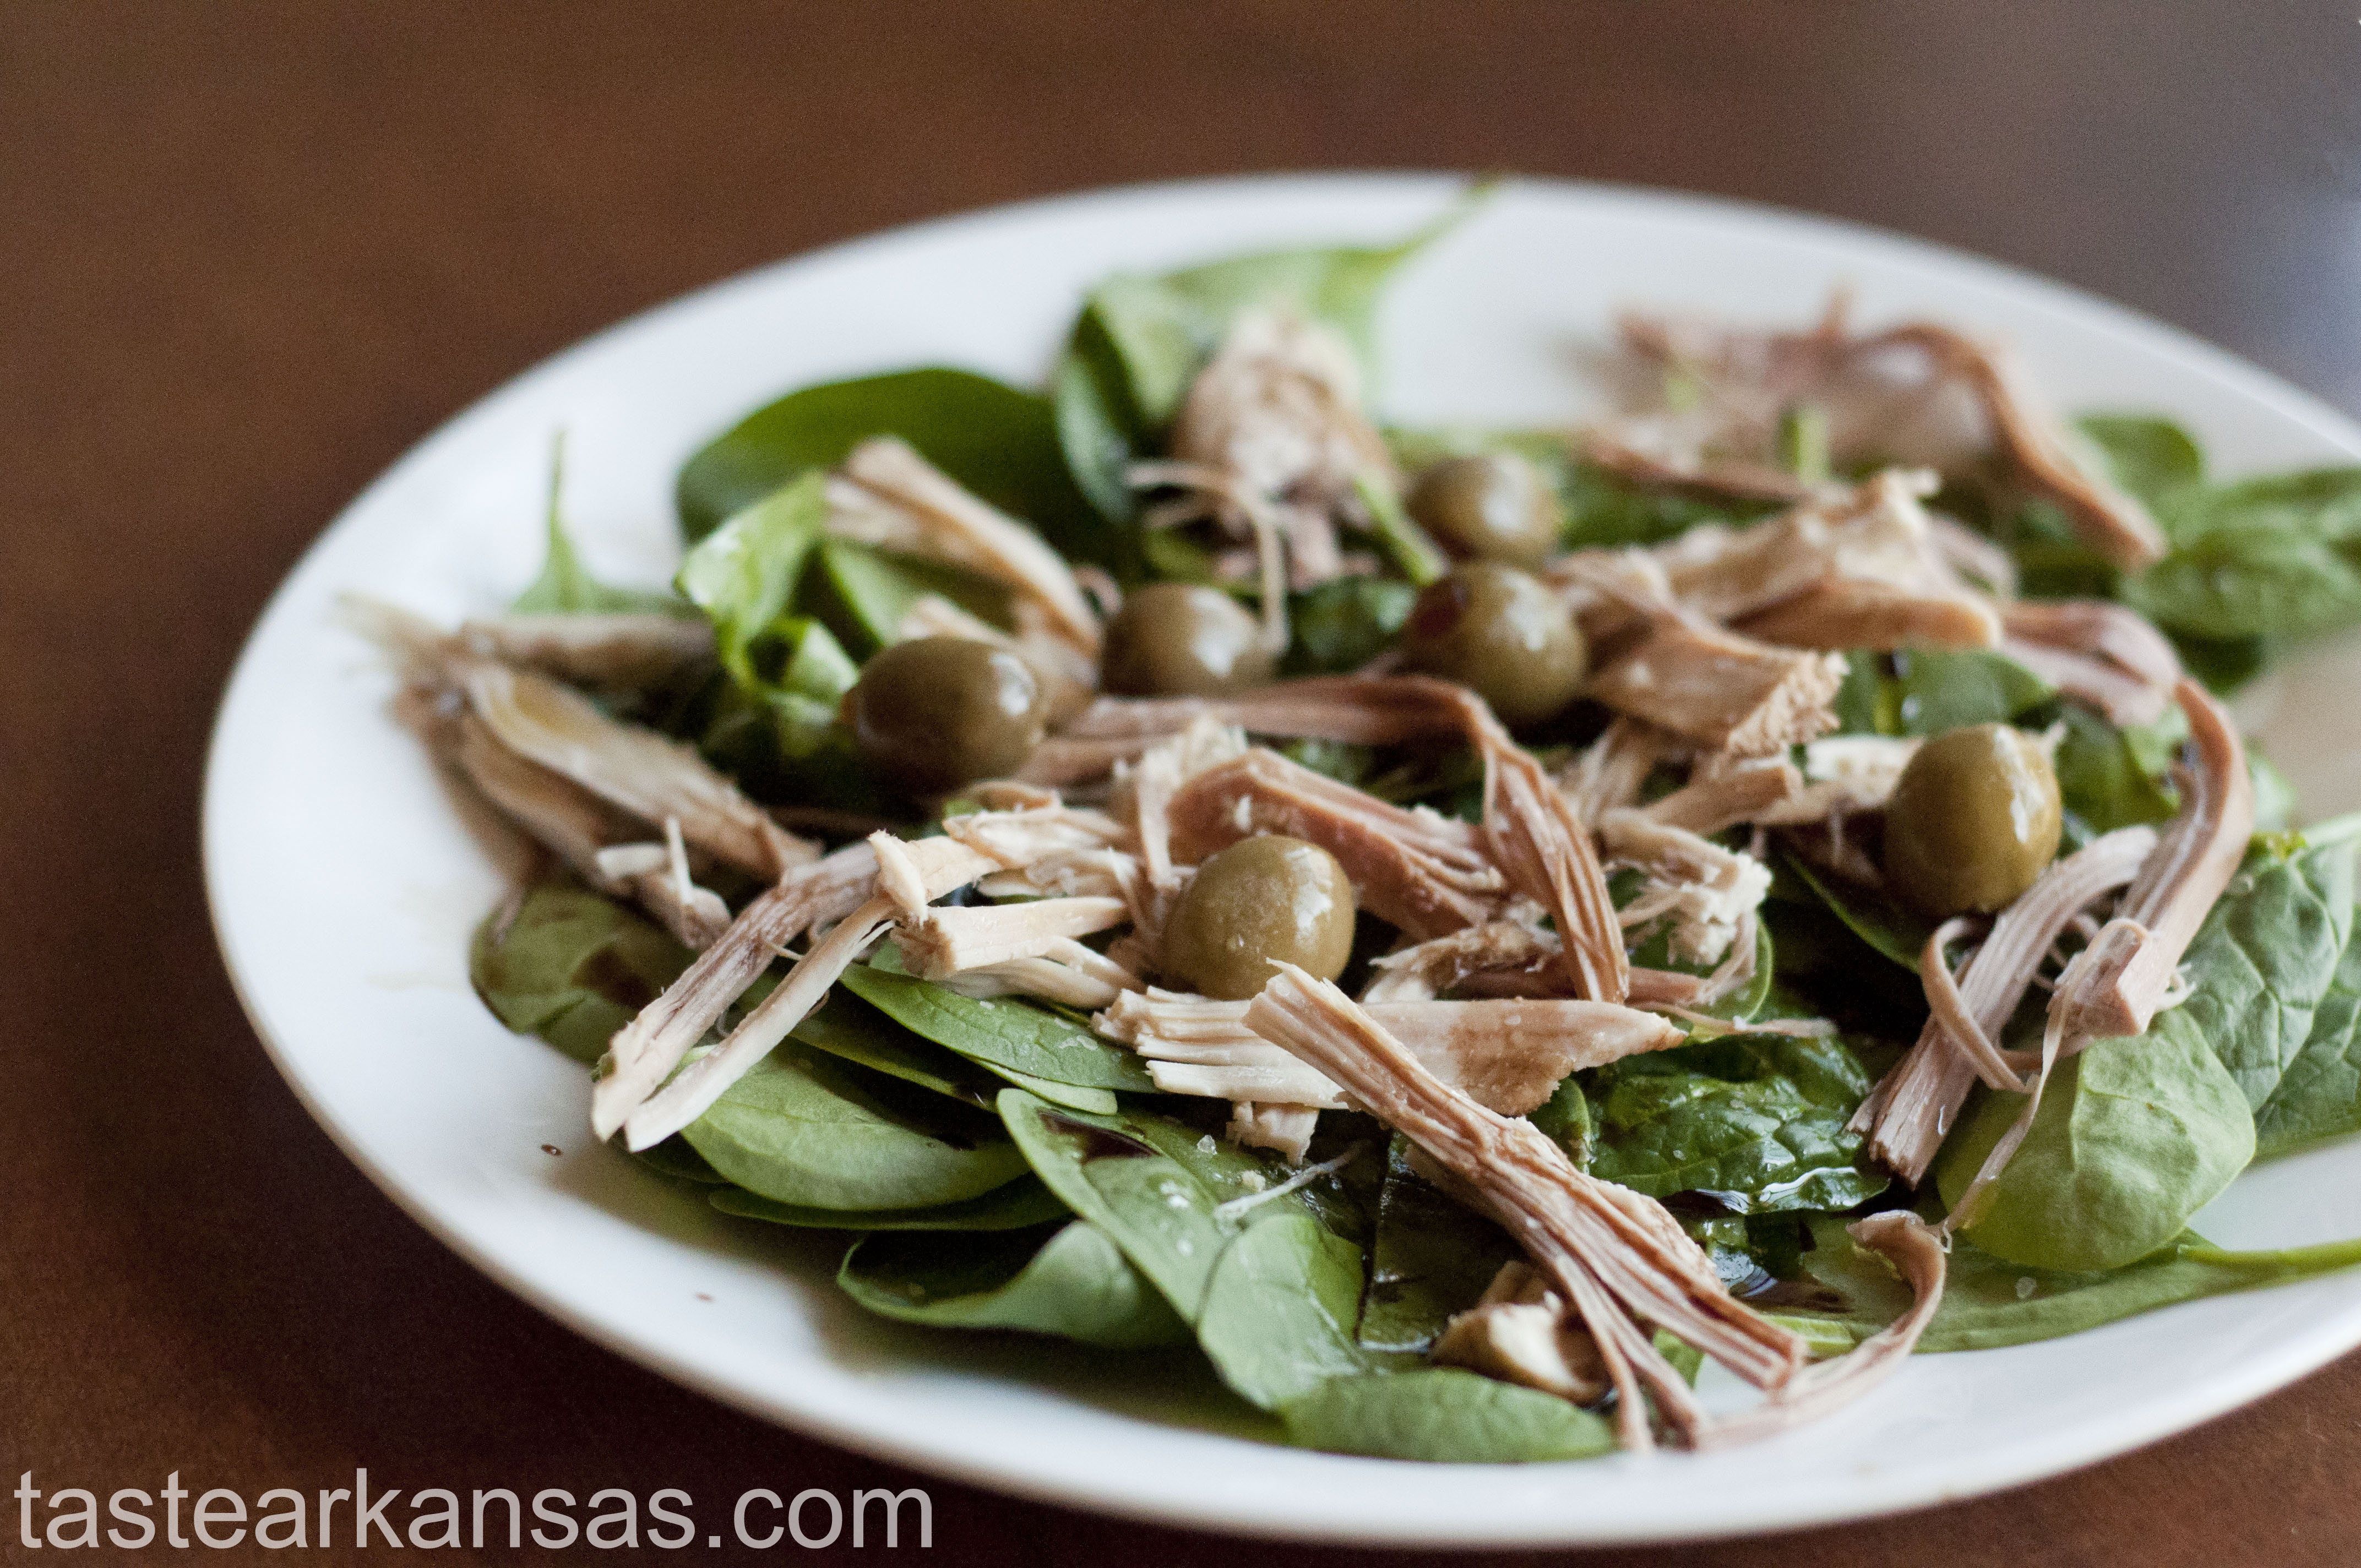 Leftover Turkey Spinach Salad